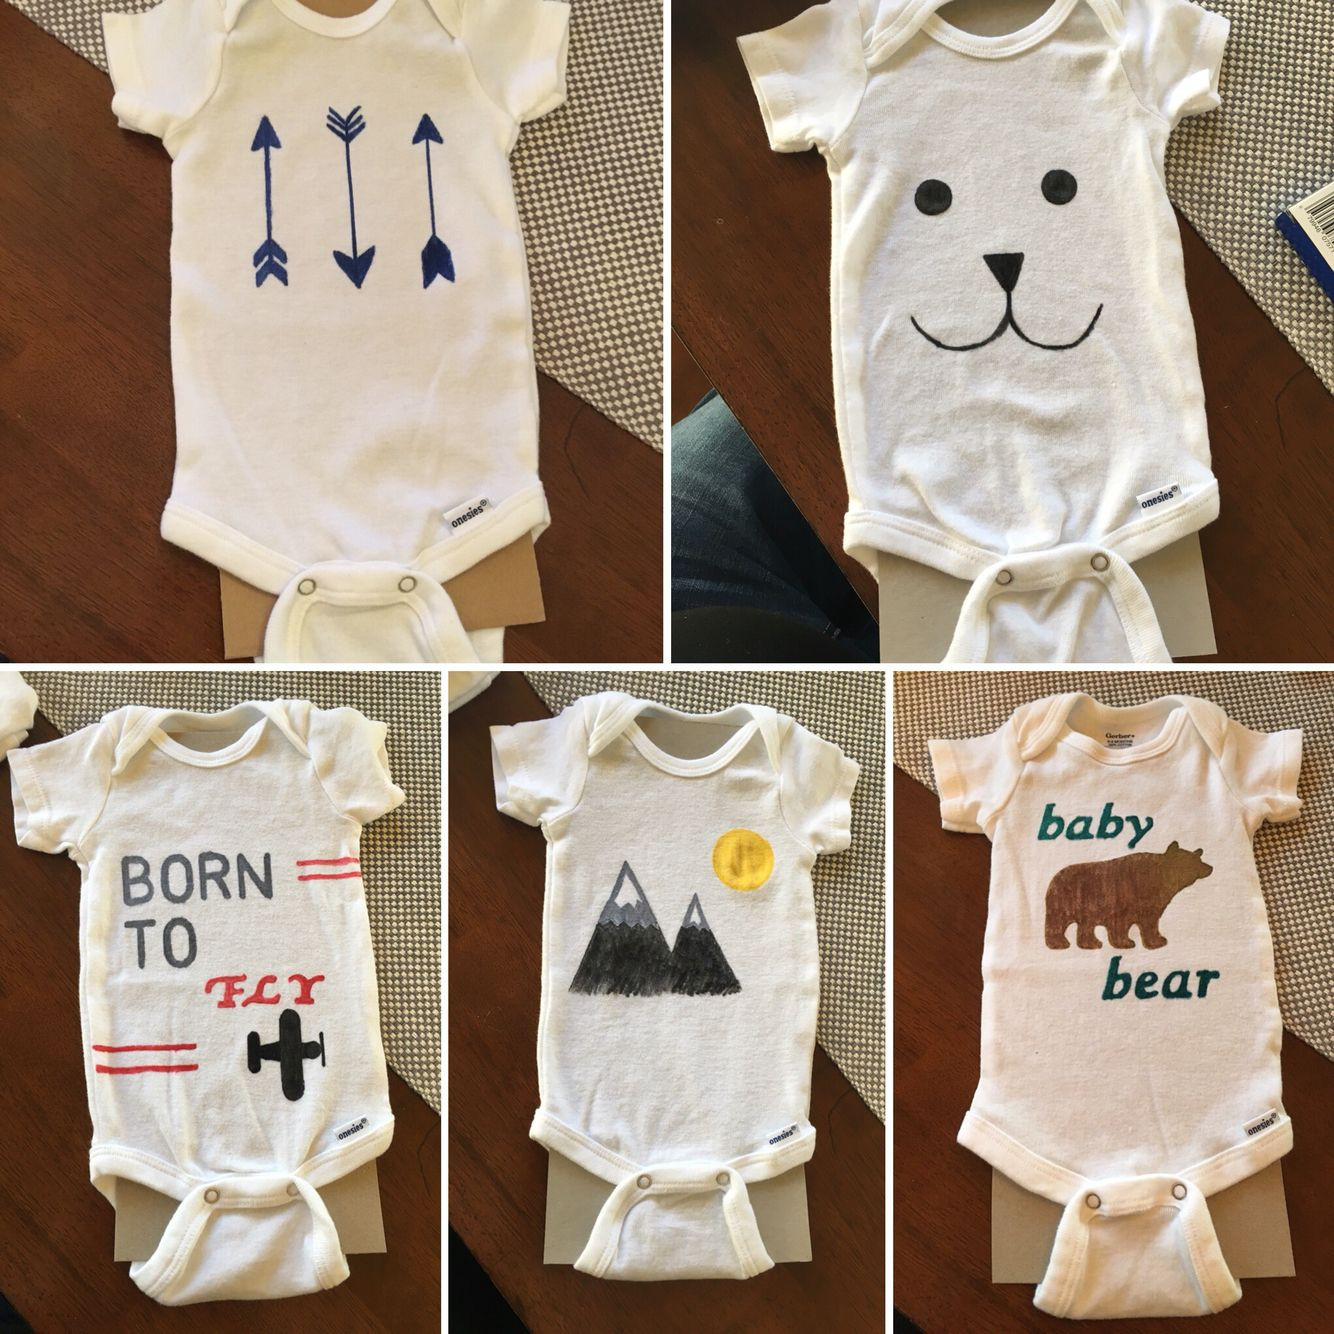 DIY Baby Onesie Ideas
 DIY Fabric marker onesies pleted projects